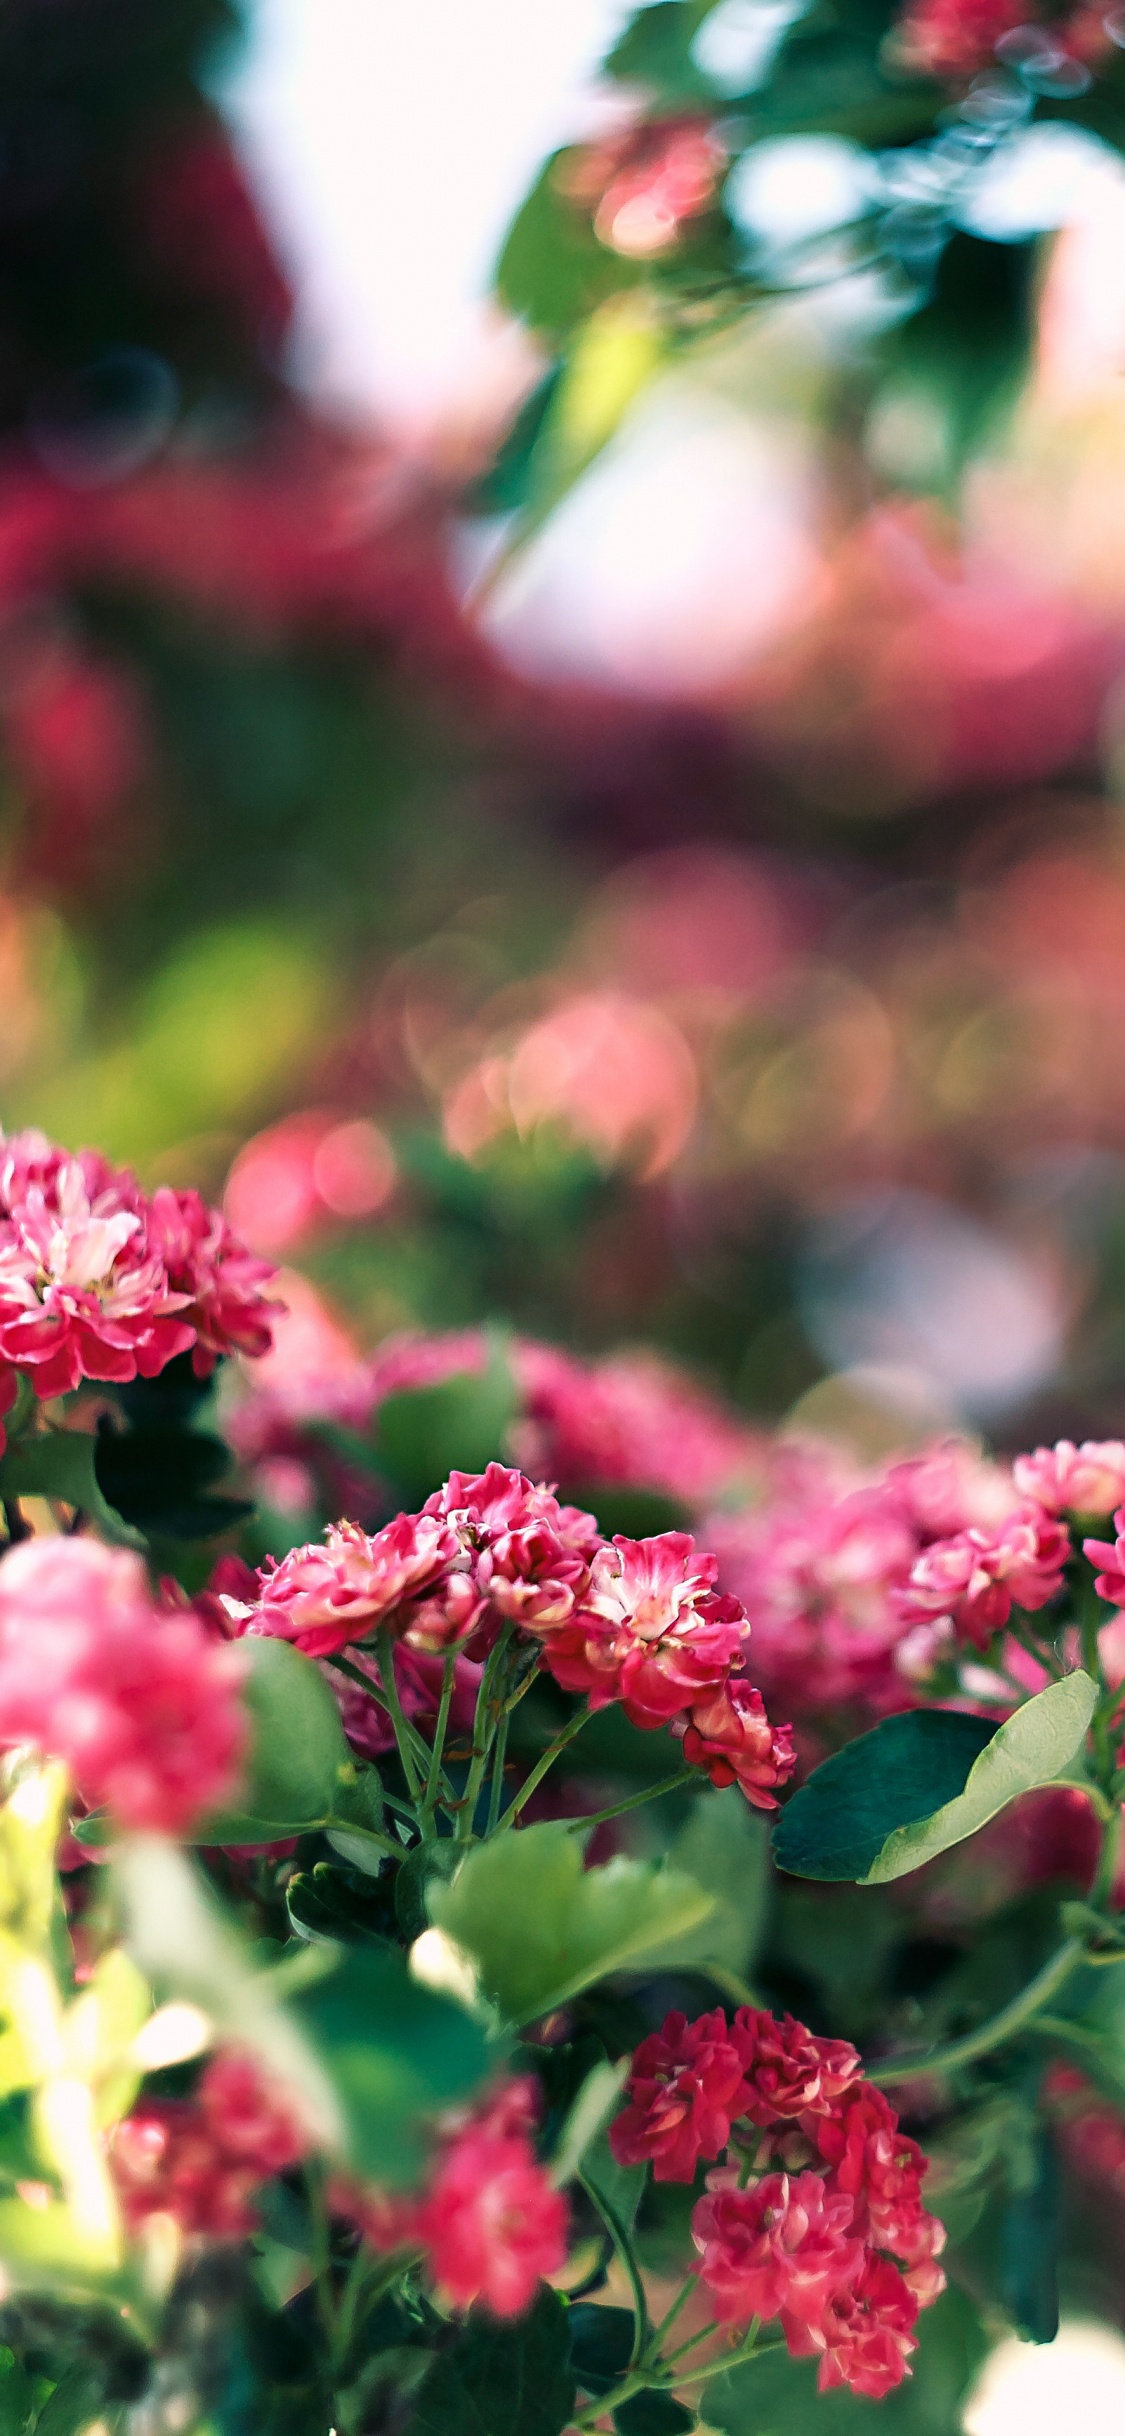 Pink and White Flowers in Tilt Shift Lens. Wallpaper in 1125x2436 Resolution